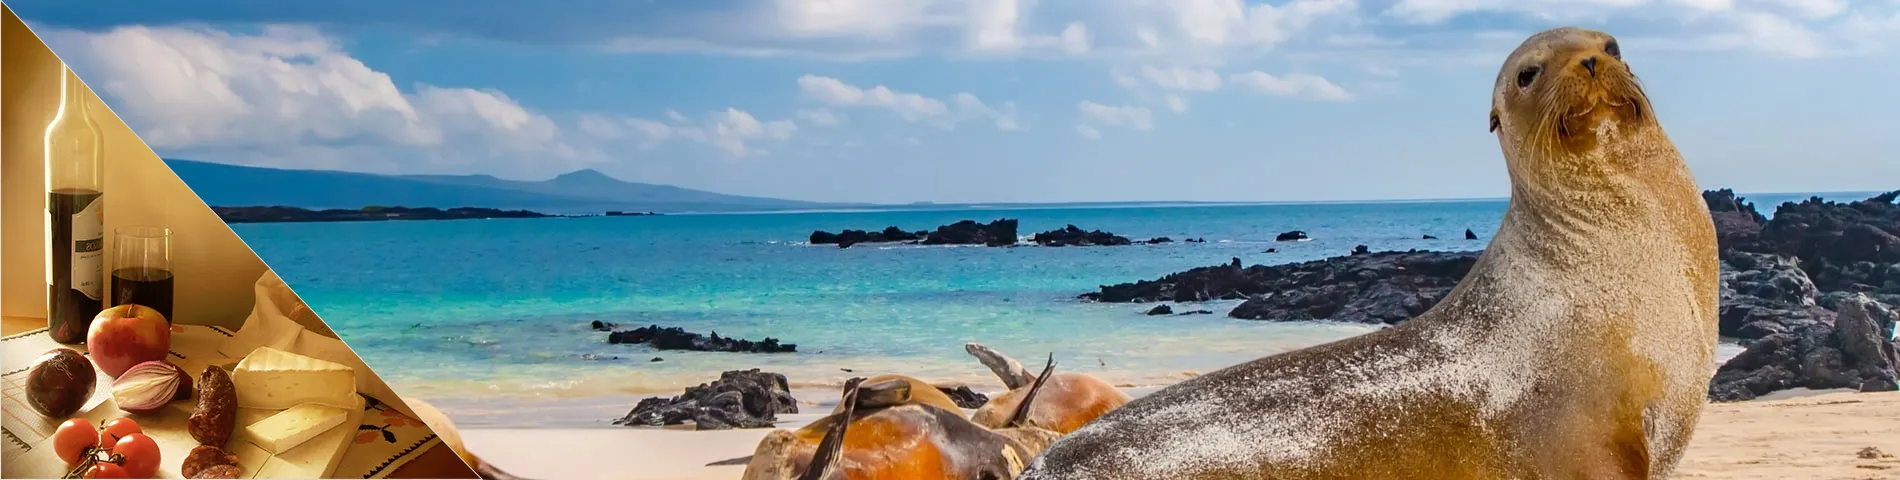 Galapagos Islands - Spanish & Culture